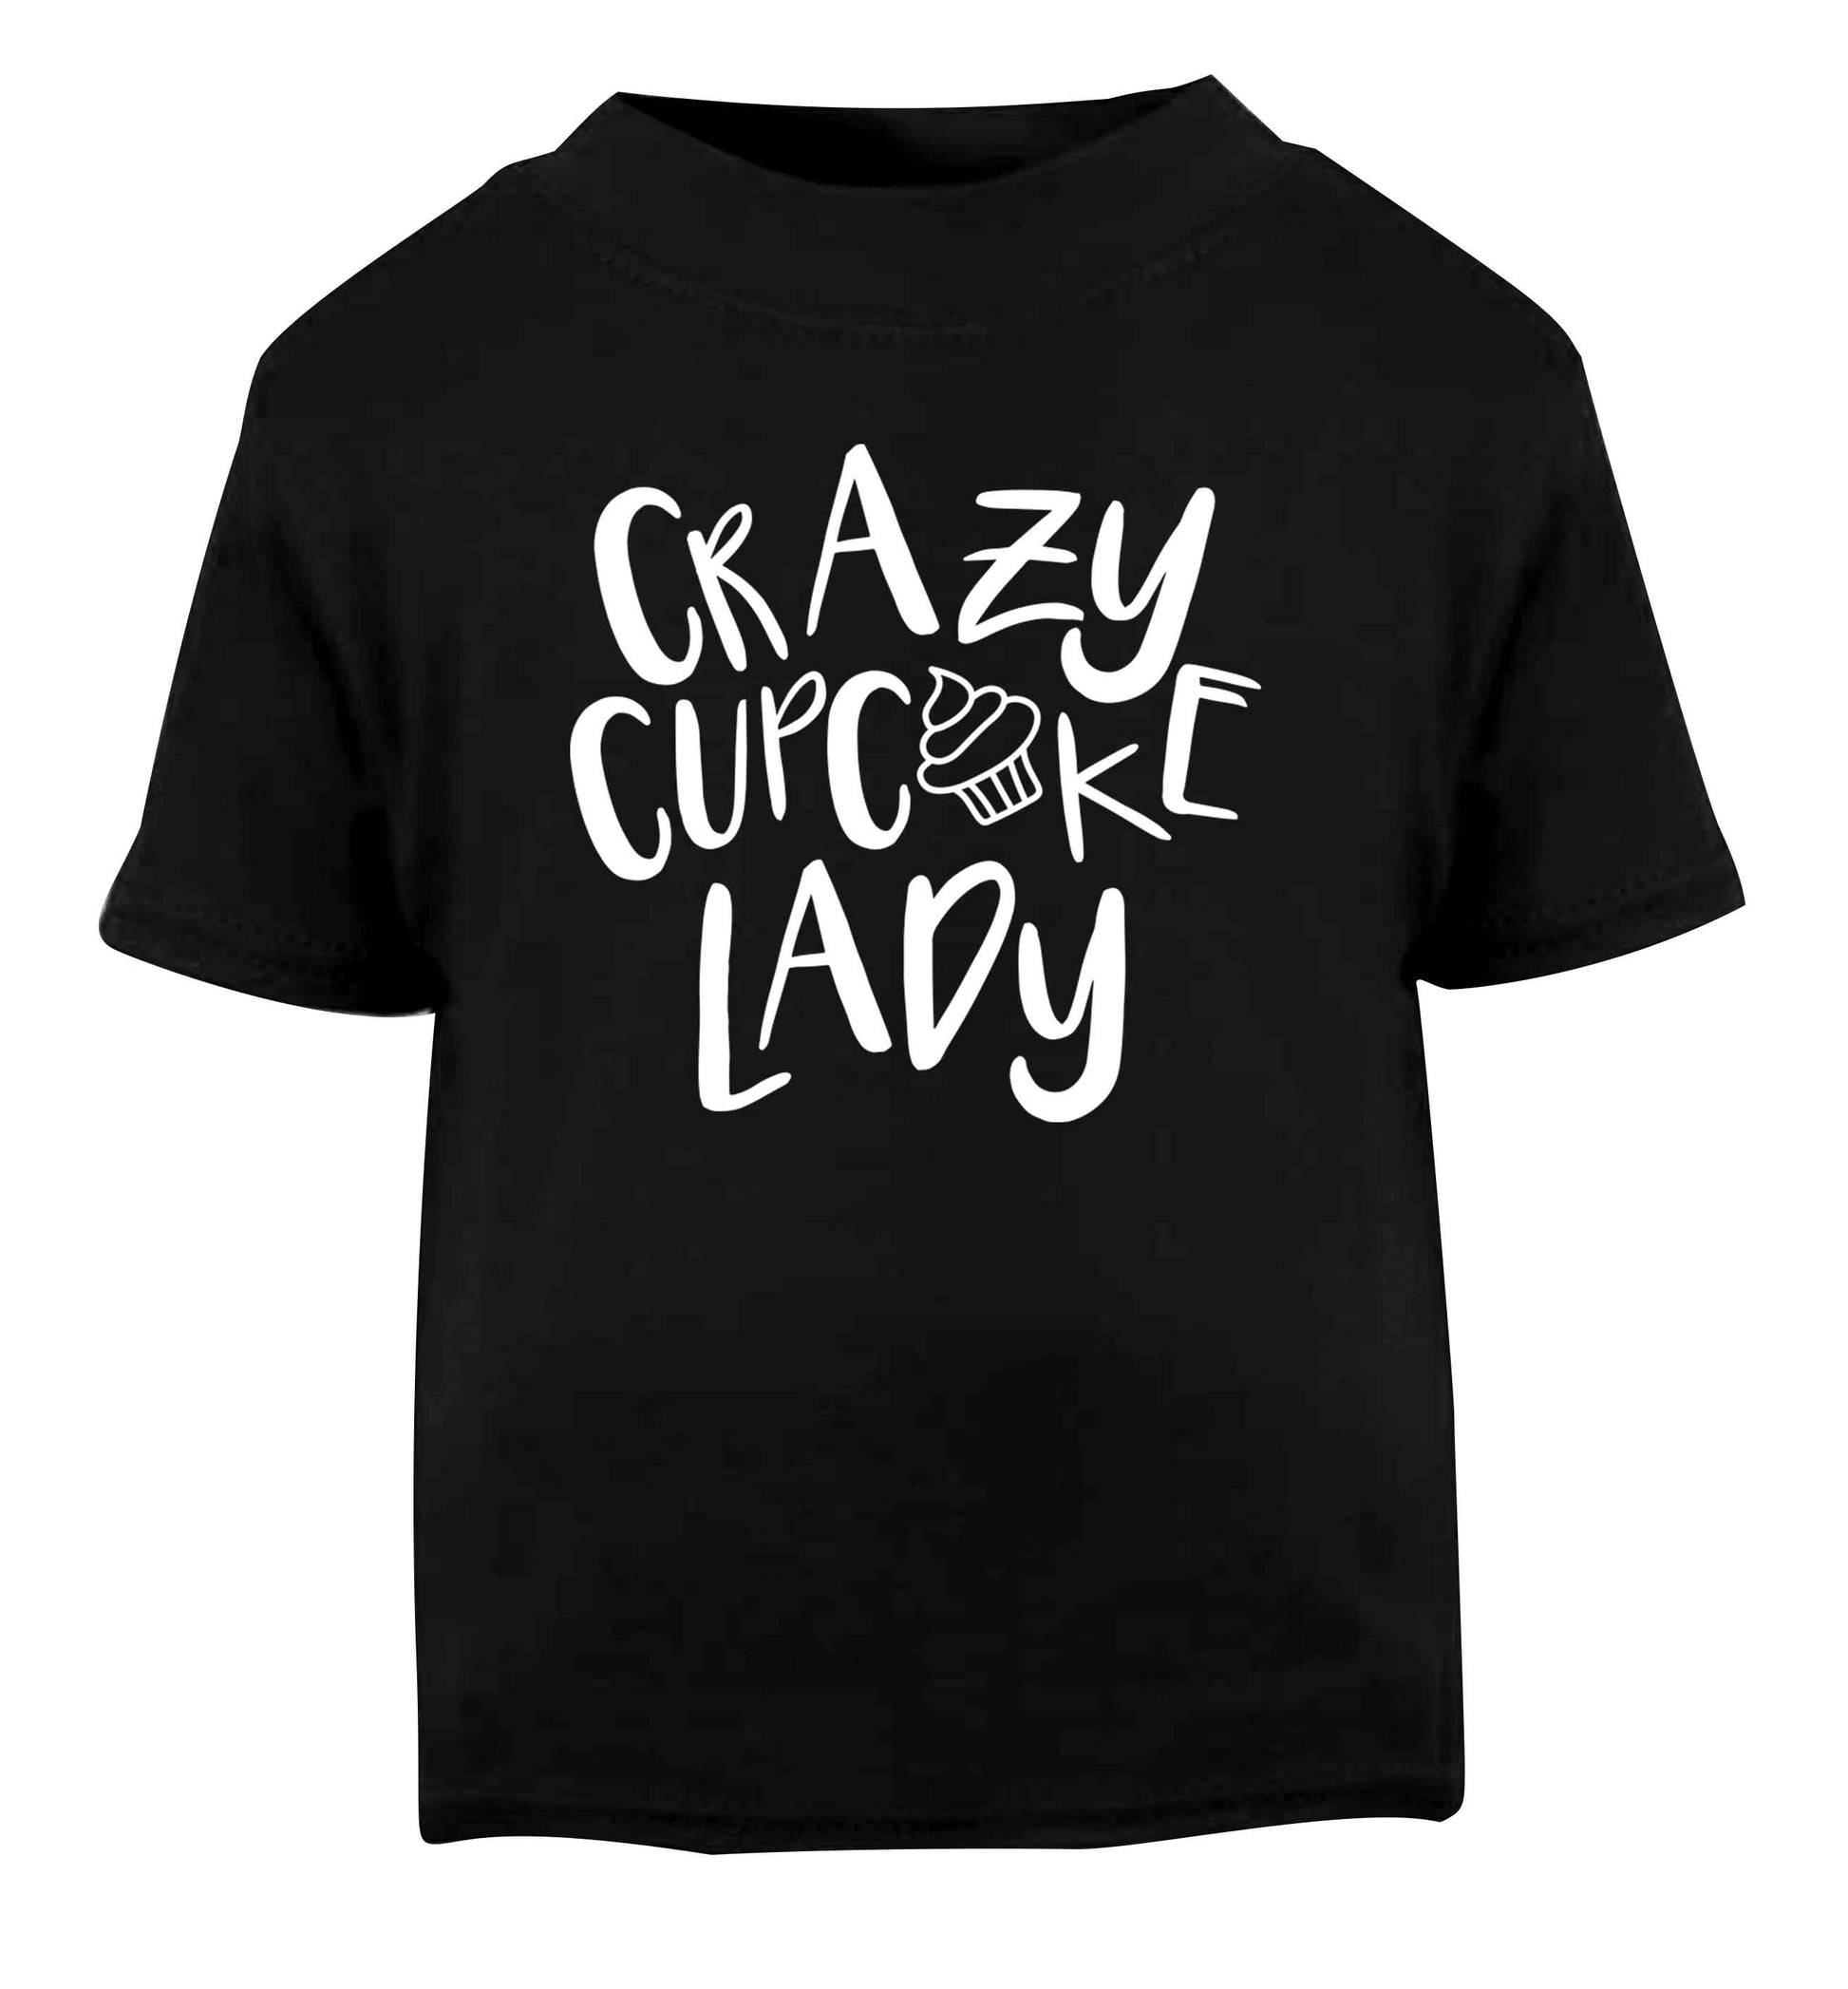 Crazy cupcake lady Black Baby Toddler Tshirt 2 years